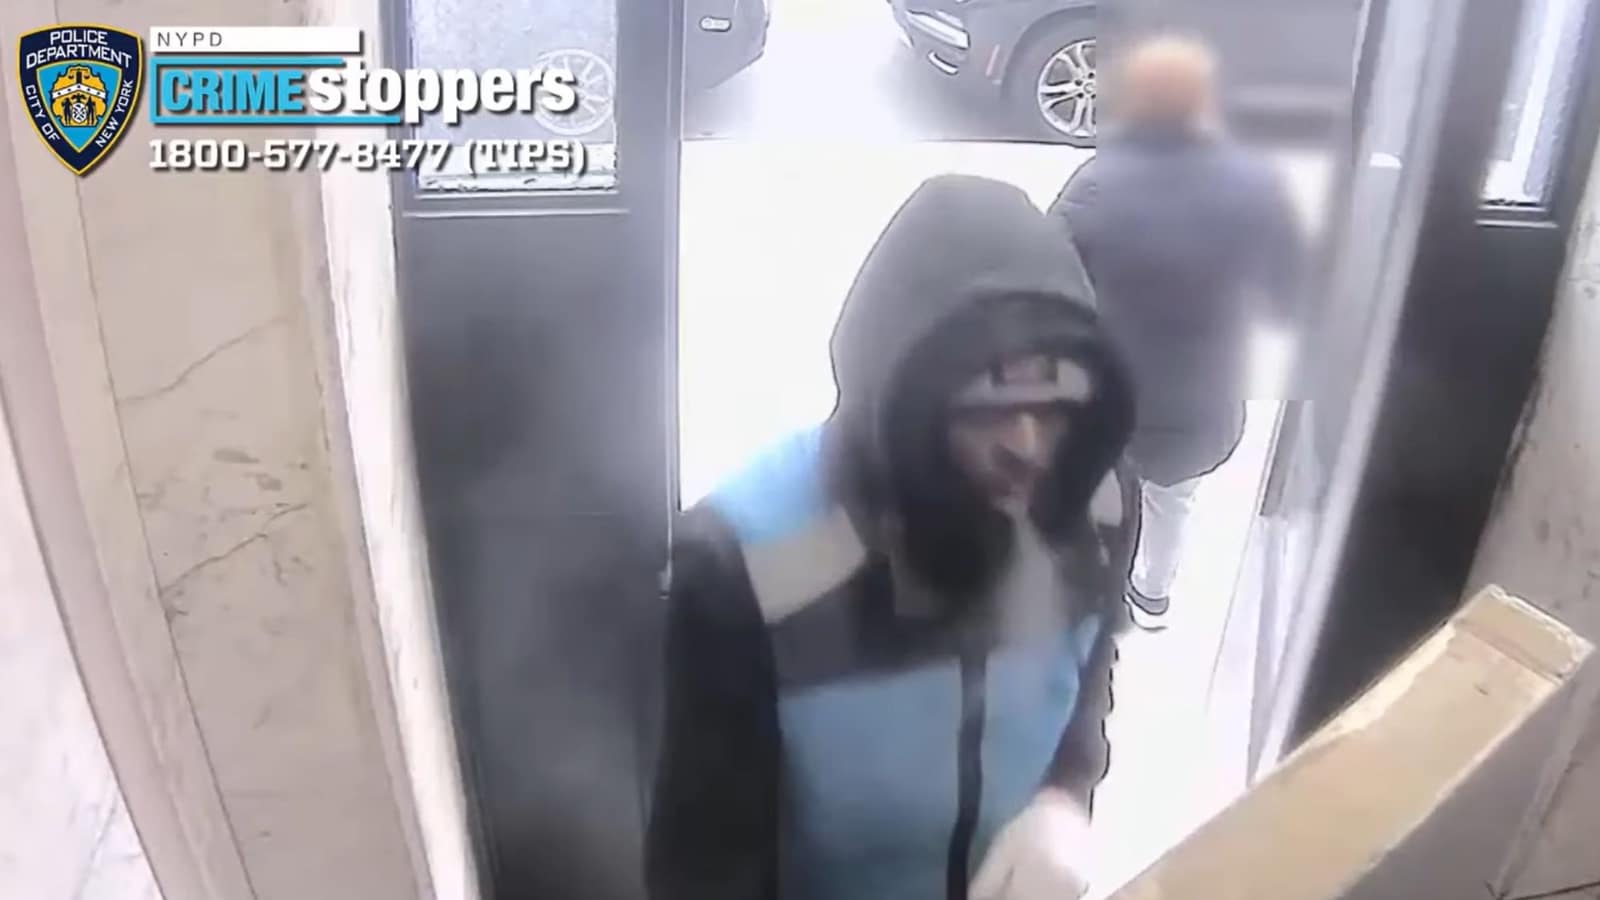 Burglar disguises himself as Amazon worker, steals $35,000 in New York City robbery spree